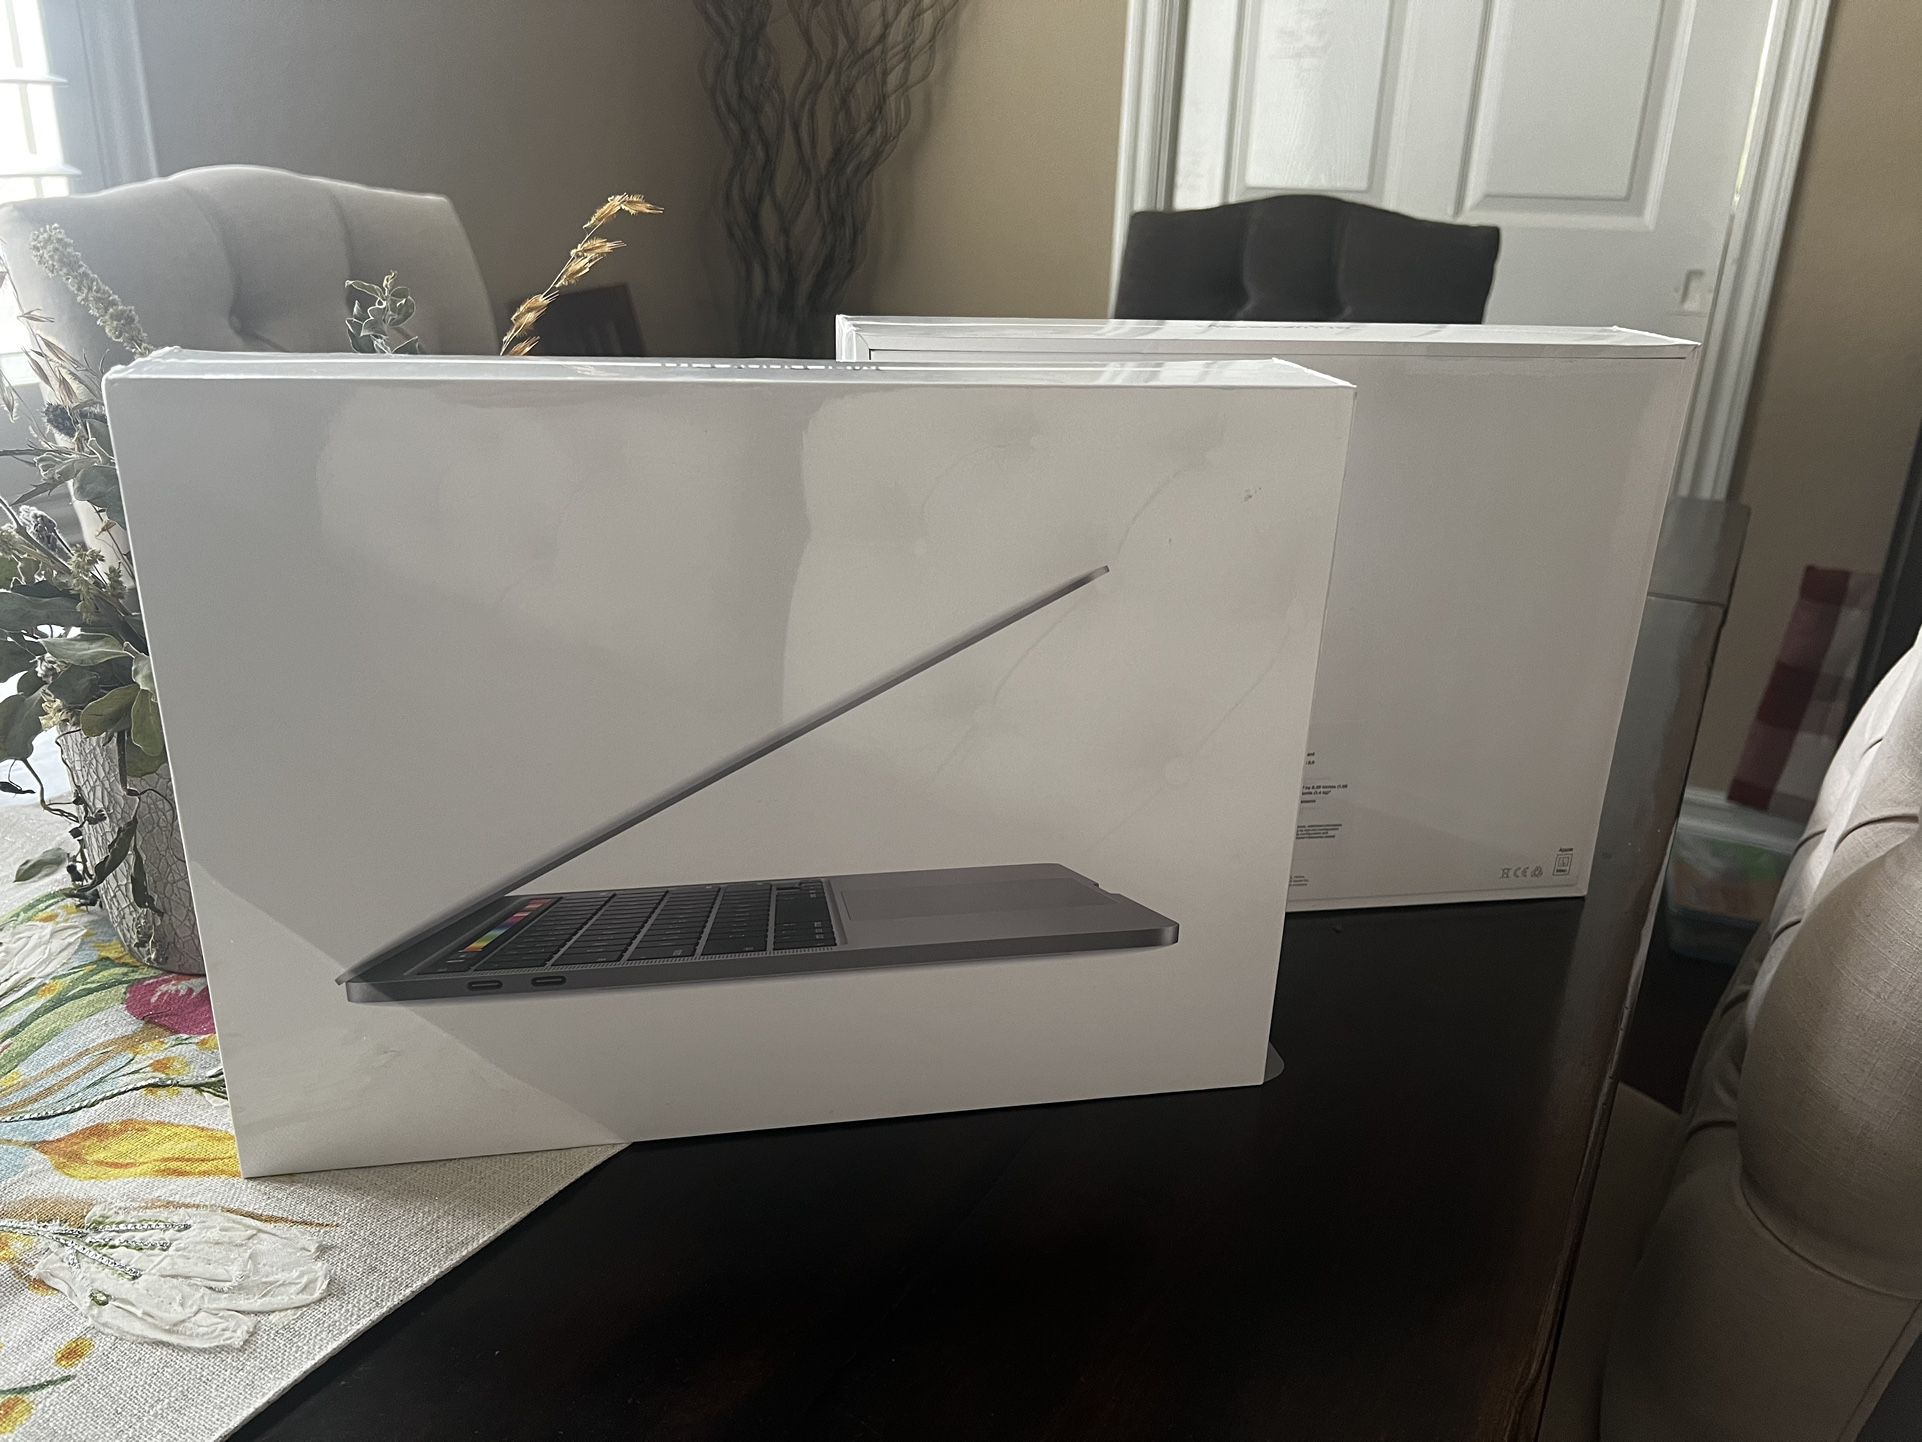 13” MacBook Pro w/ Touch Bar — Brand New